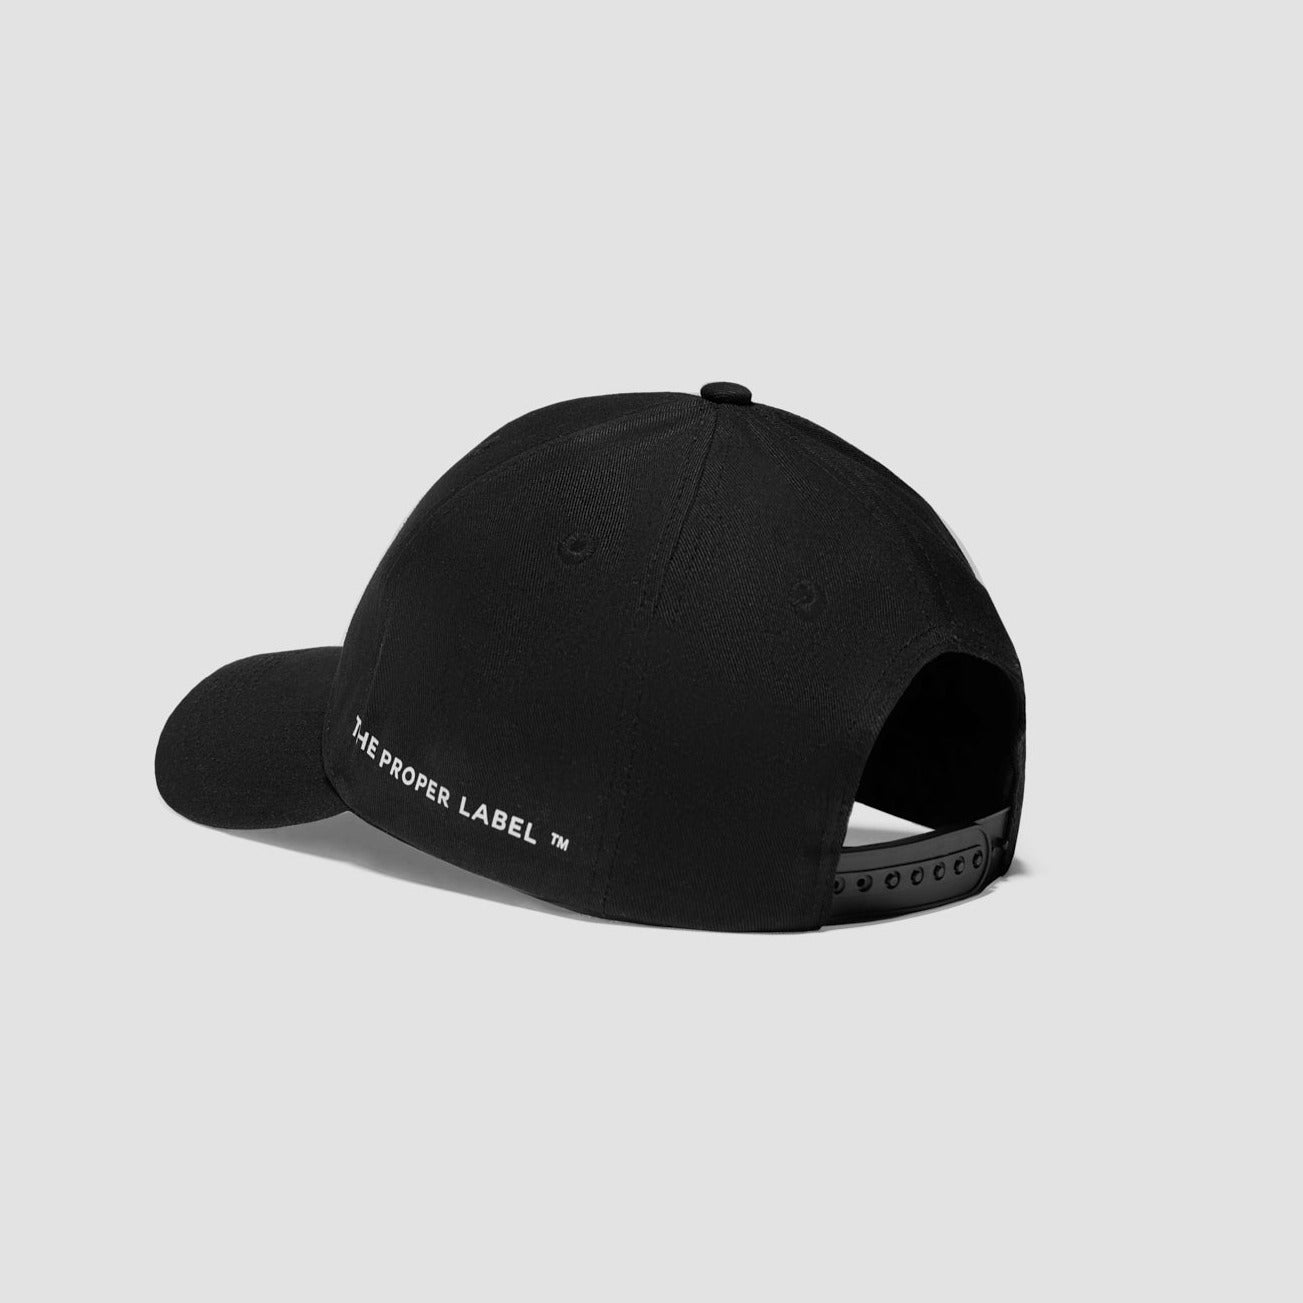 The Proper Baseball Cap ™ Black [White Dove] - The Proper Label ™